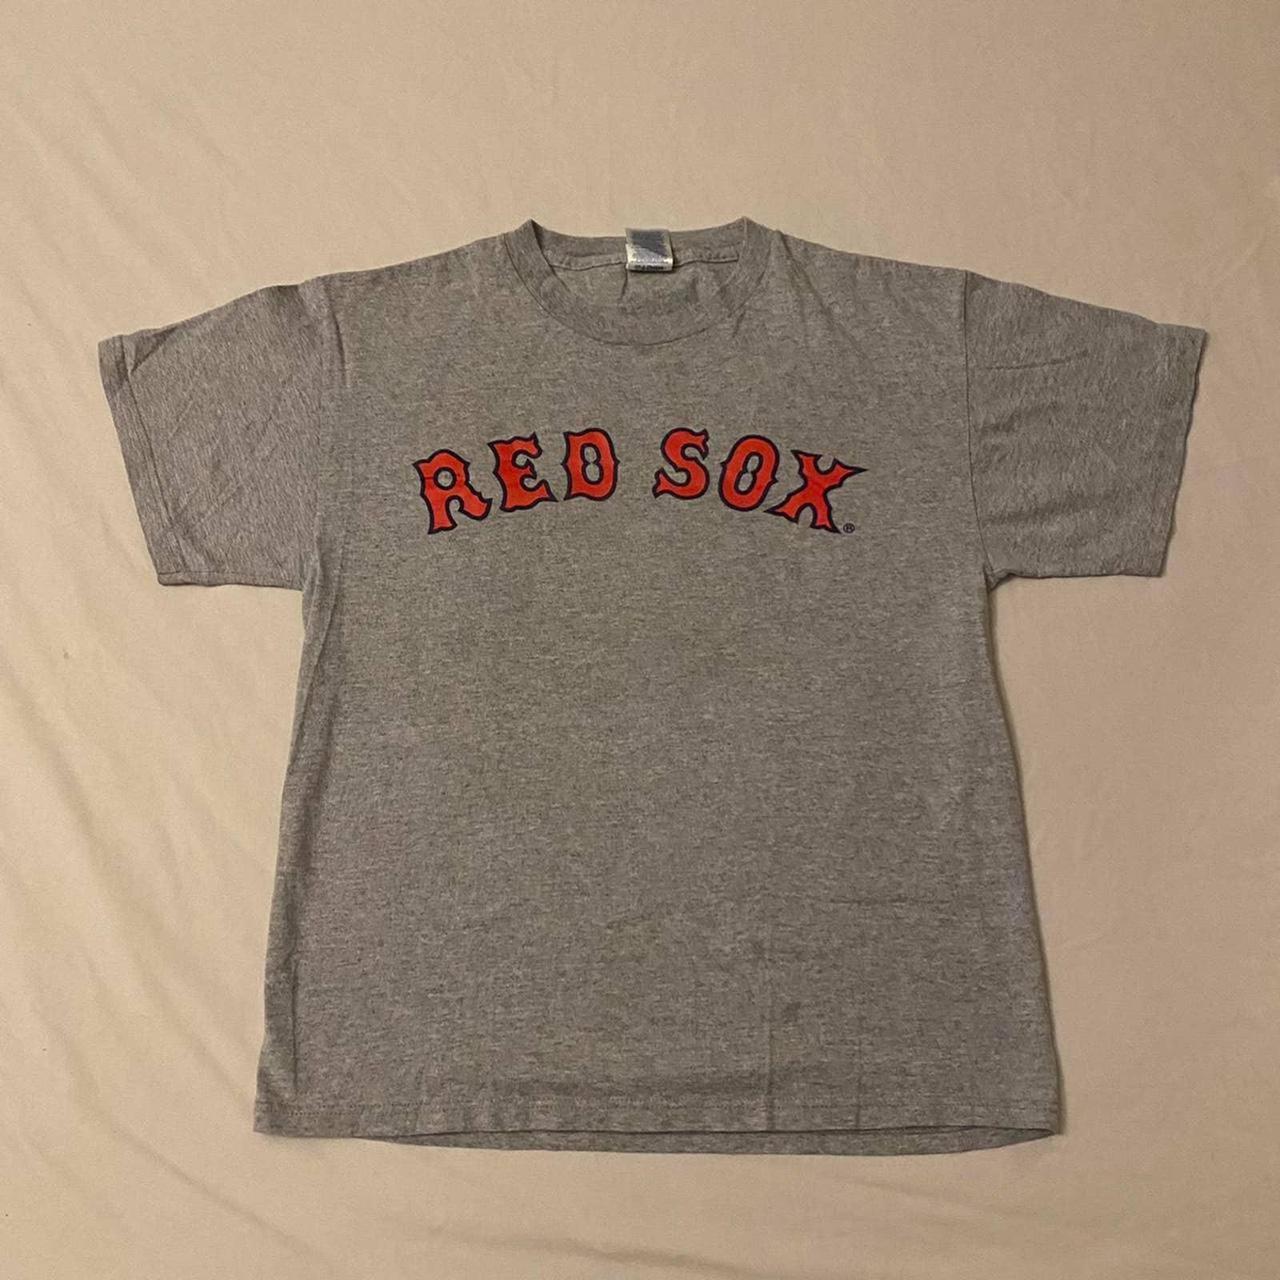 2005 David Ortiz Boston Red Sox Shirt #redsox - Depop